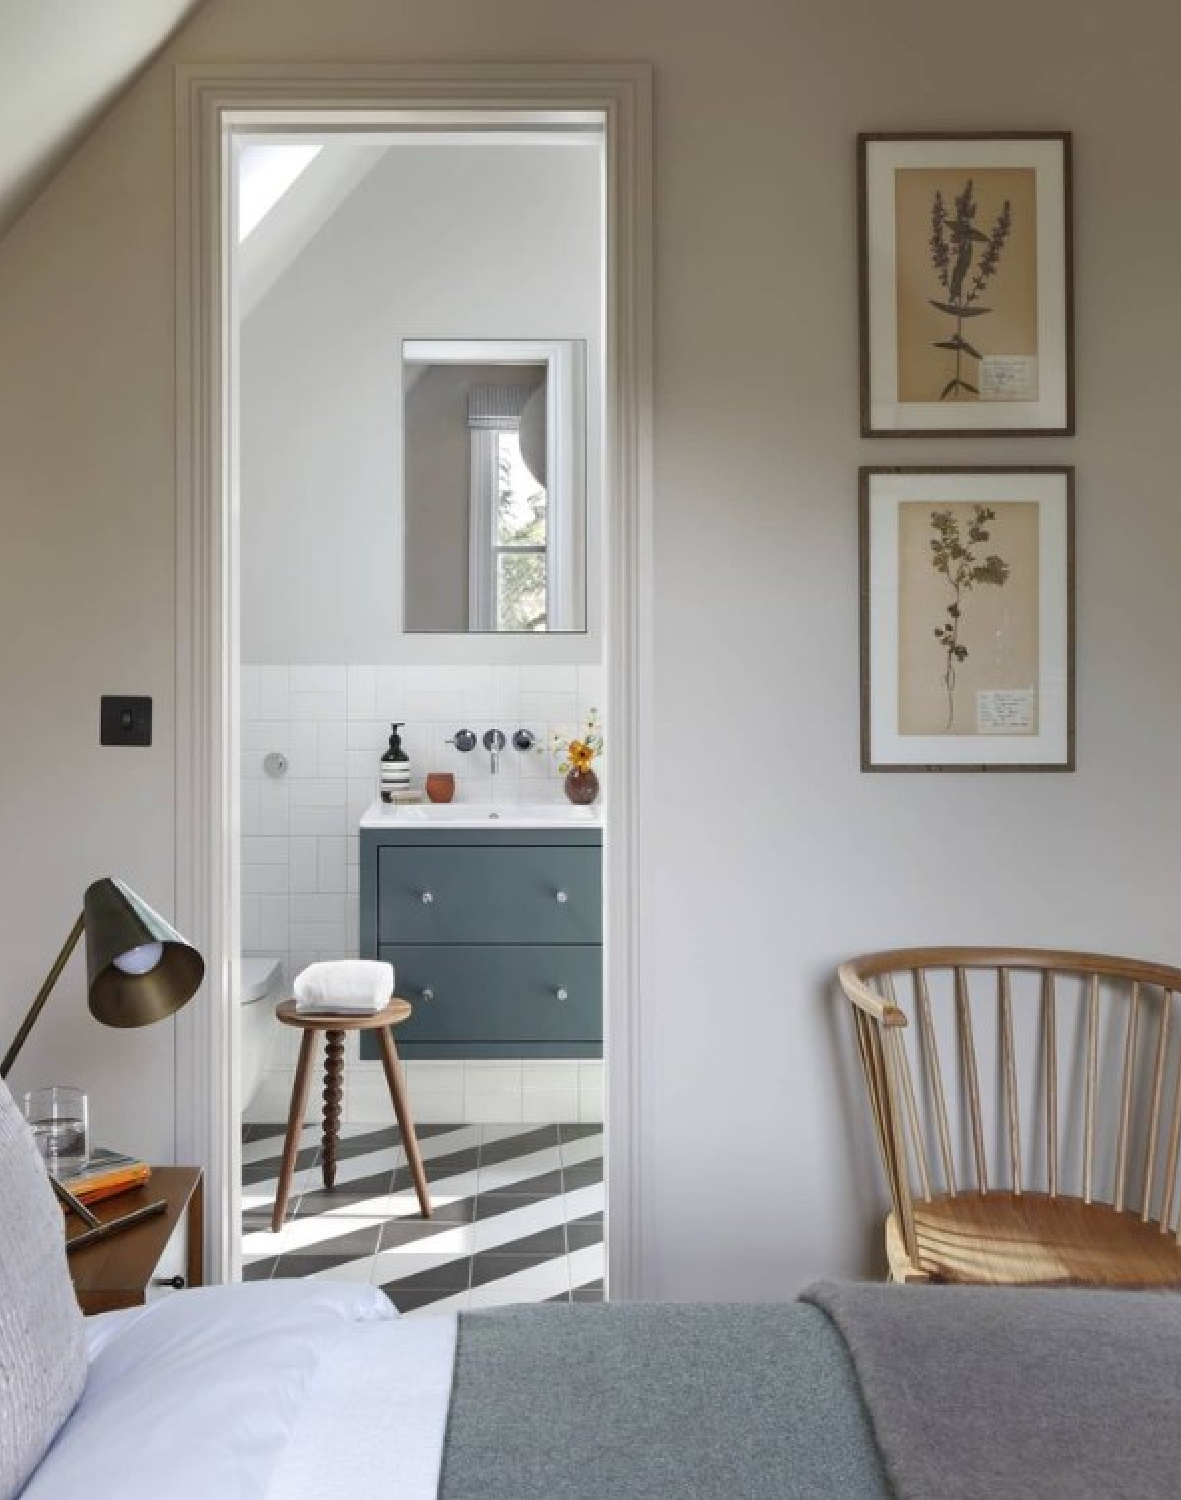 Christian Bense designed bedroom and bath with serene mood, stripe floor tile, and minimal modern style. #minimalmodern